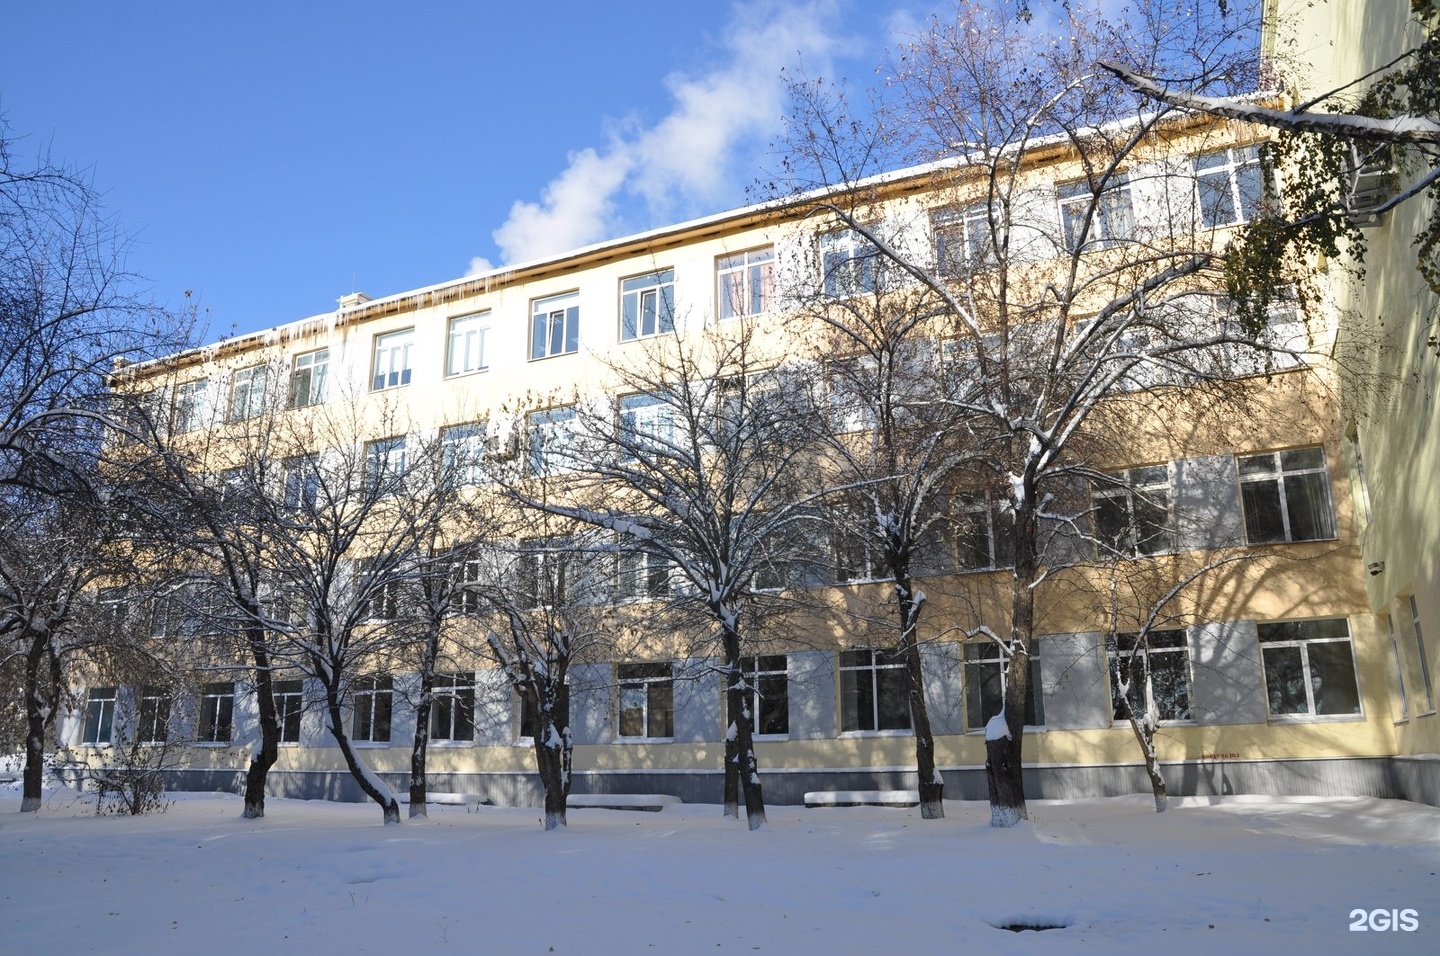 Сайт колледжа екатеринбургского